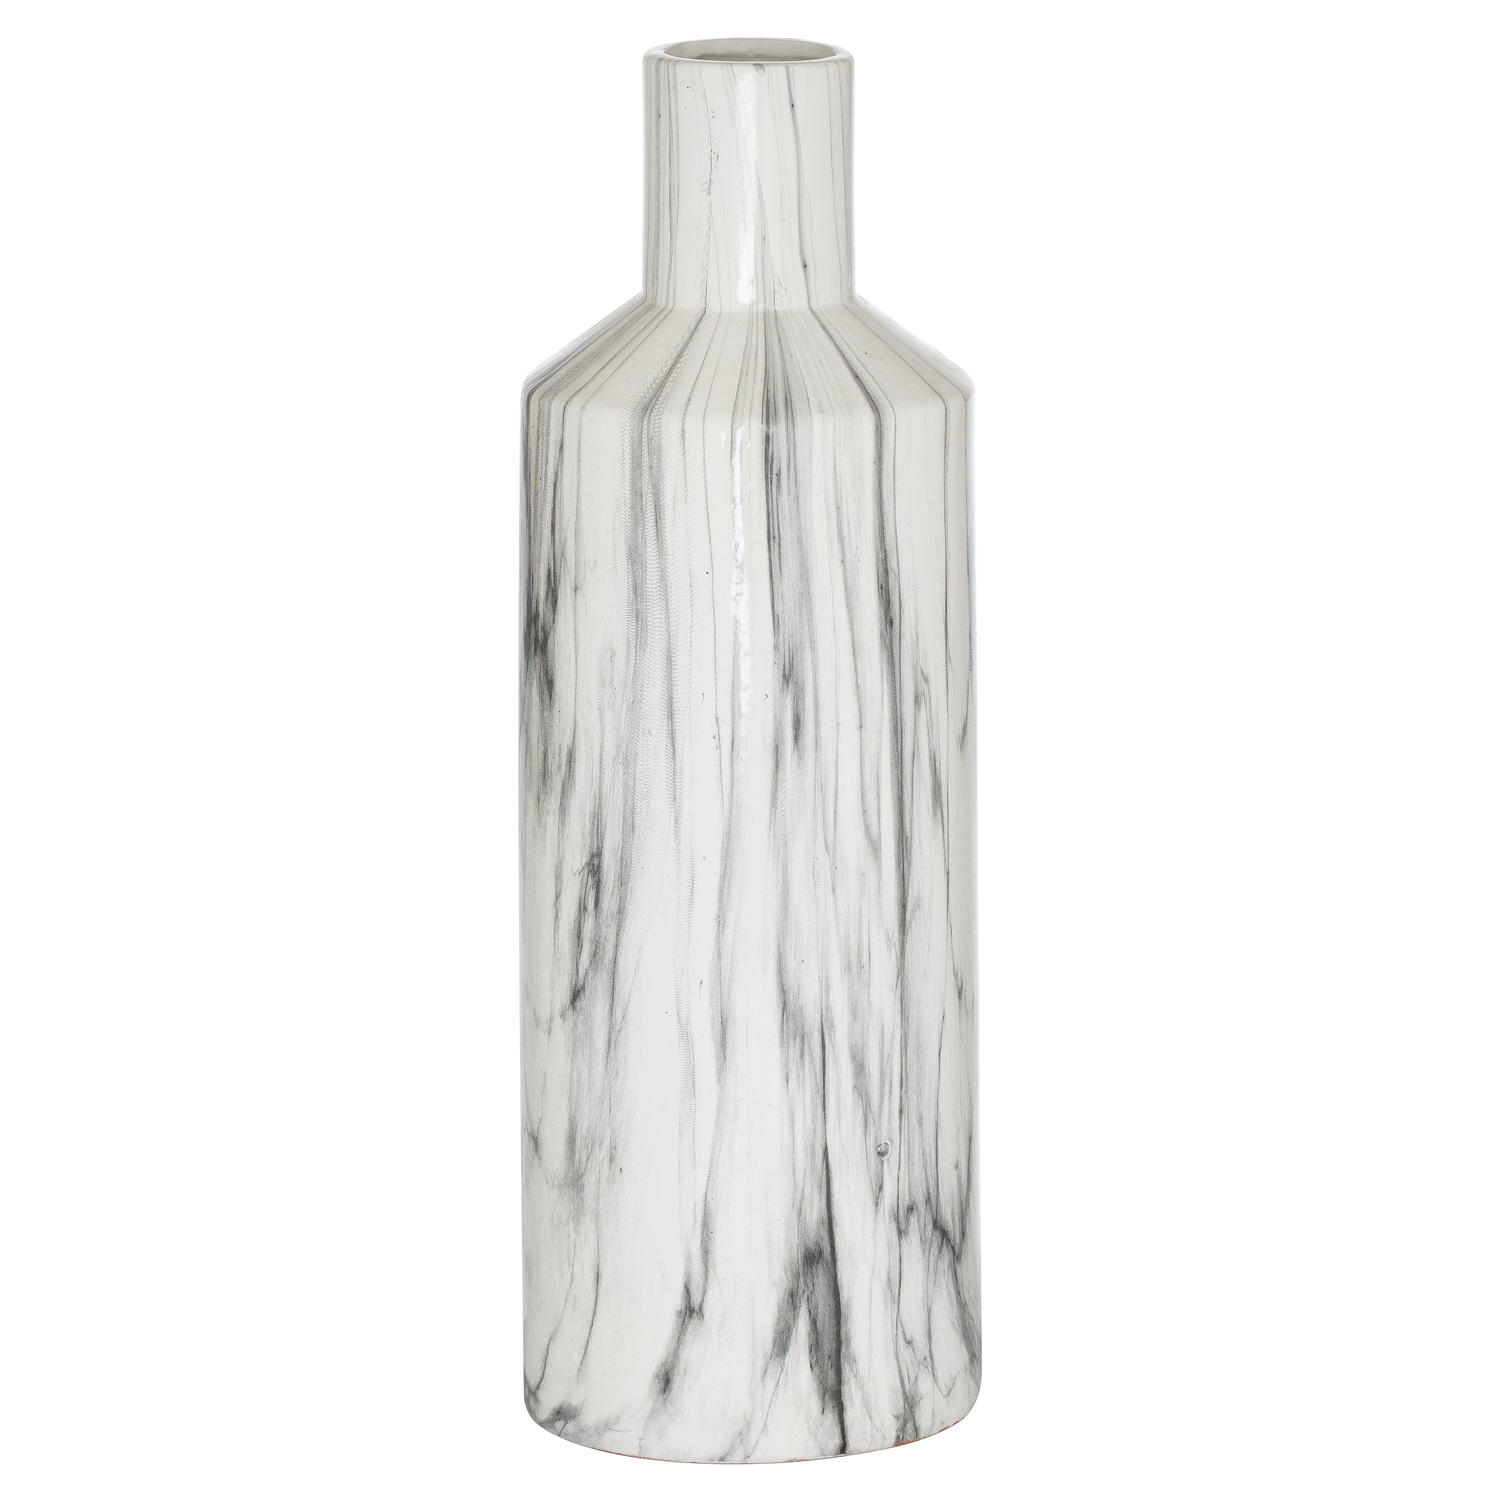 Marble Sutra Large Vase - Image 1